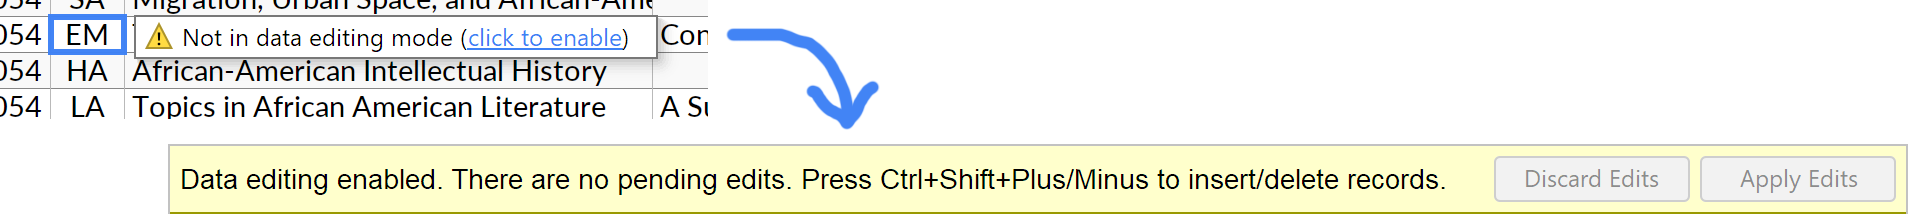 Screenshot showing edit mode tooltip and status bar